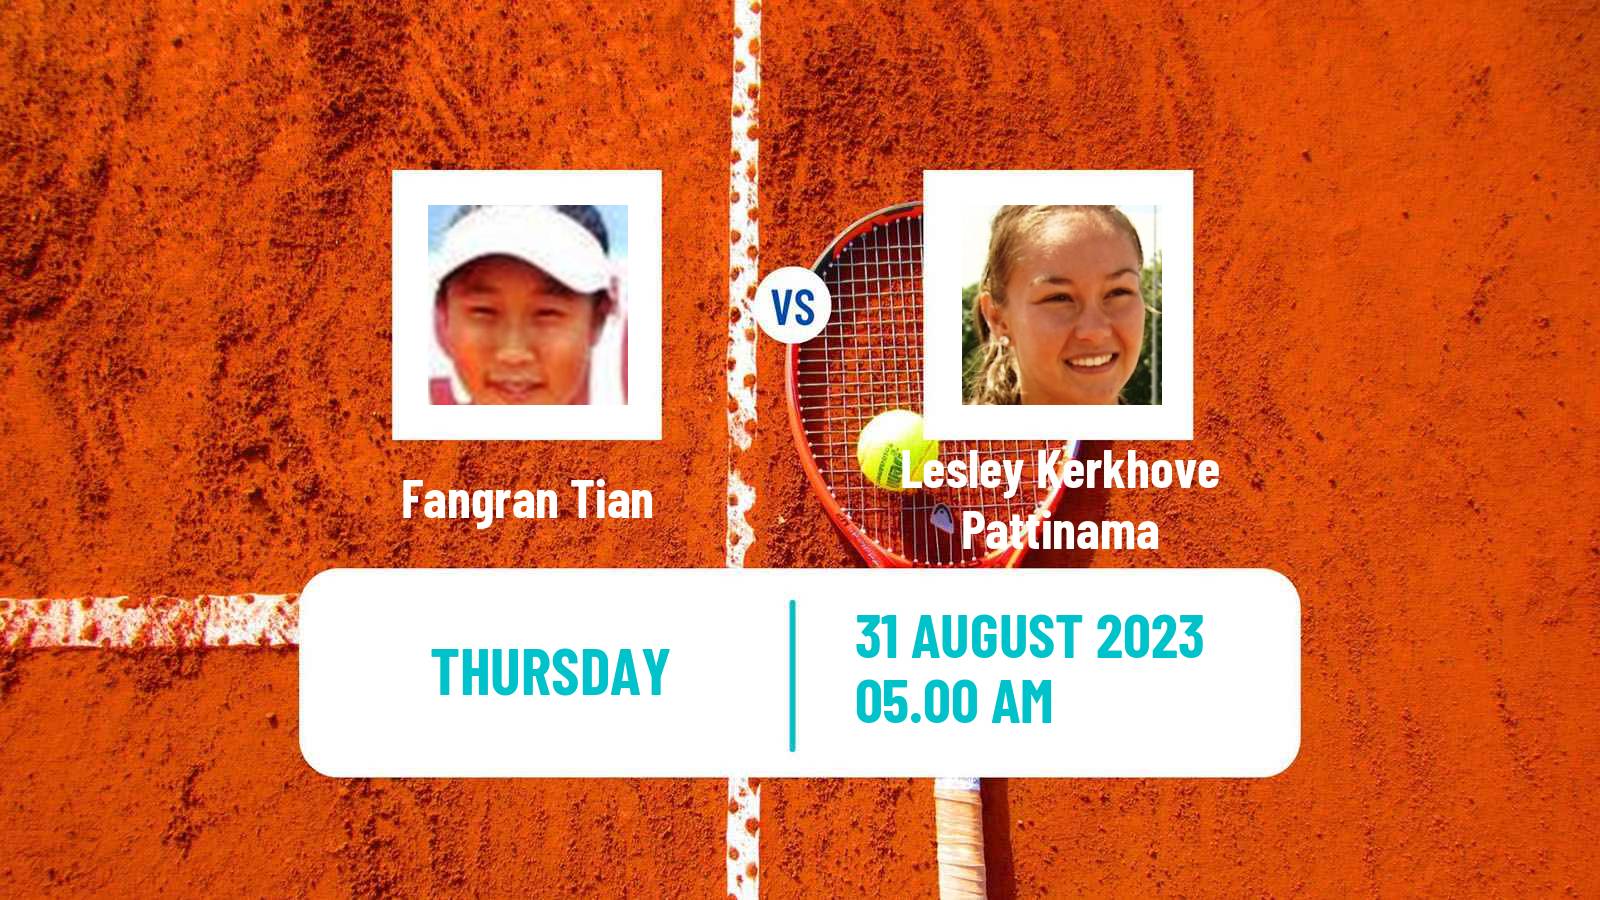 Tennis ITF W25 Valladolid Women Fangran Tian - Lesley Kerkhove Pattinama